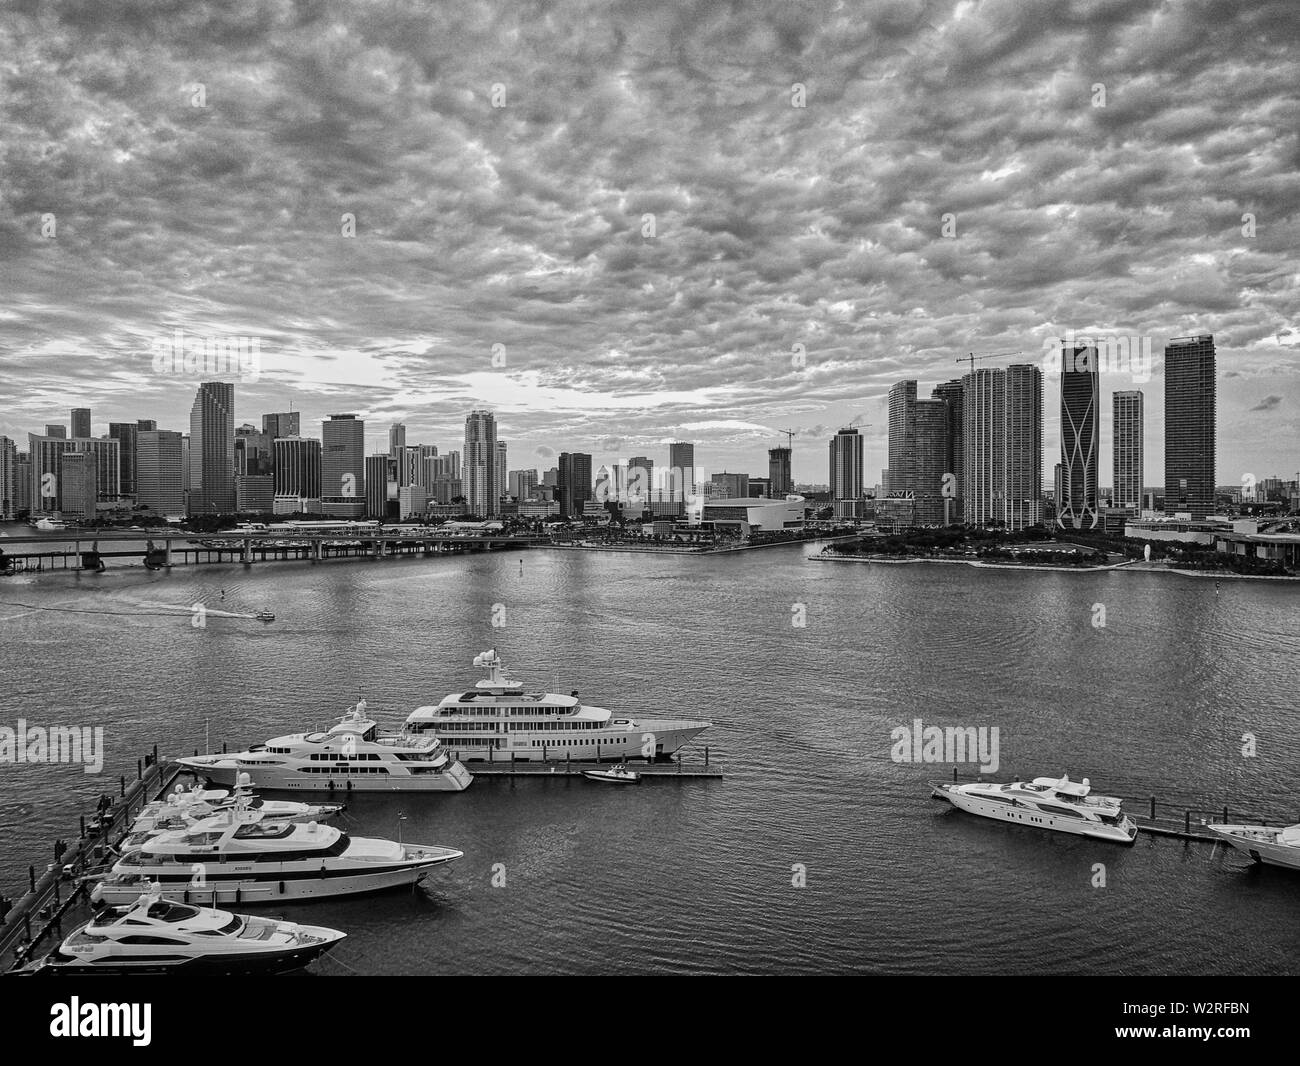 Luftbild der Bucht in Miami, Florida, USA Stockfotografie - Alamy